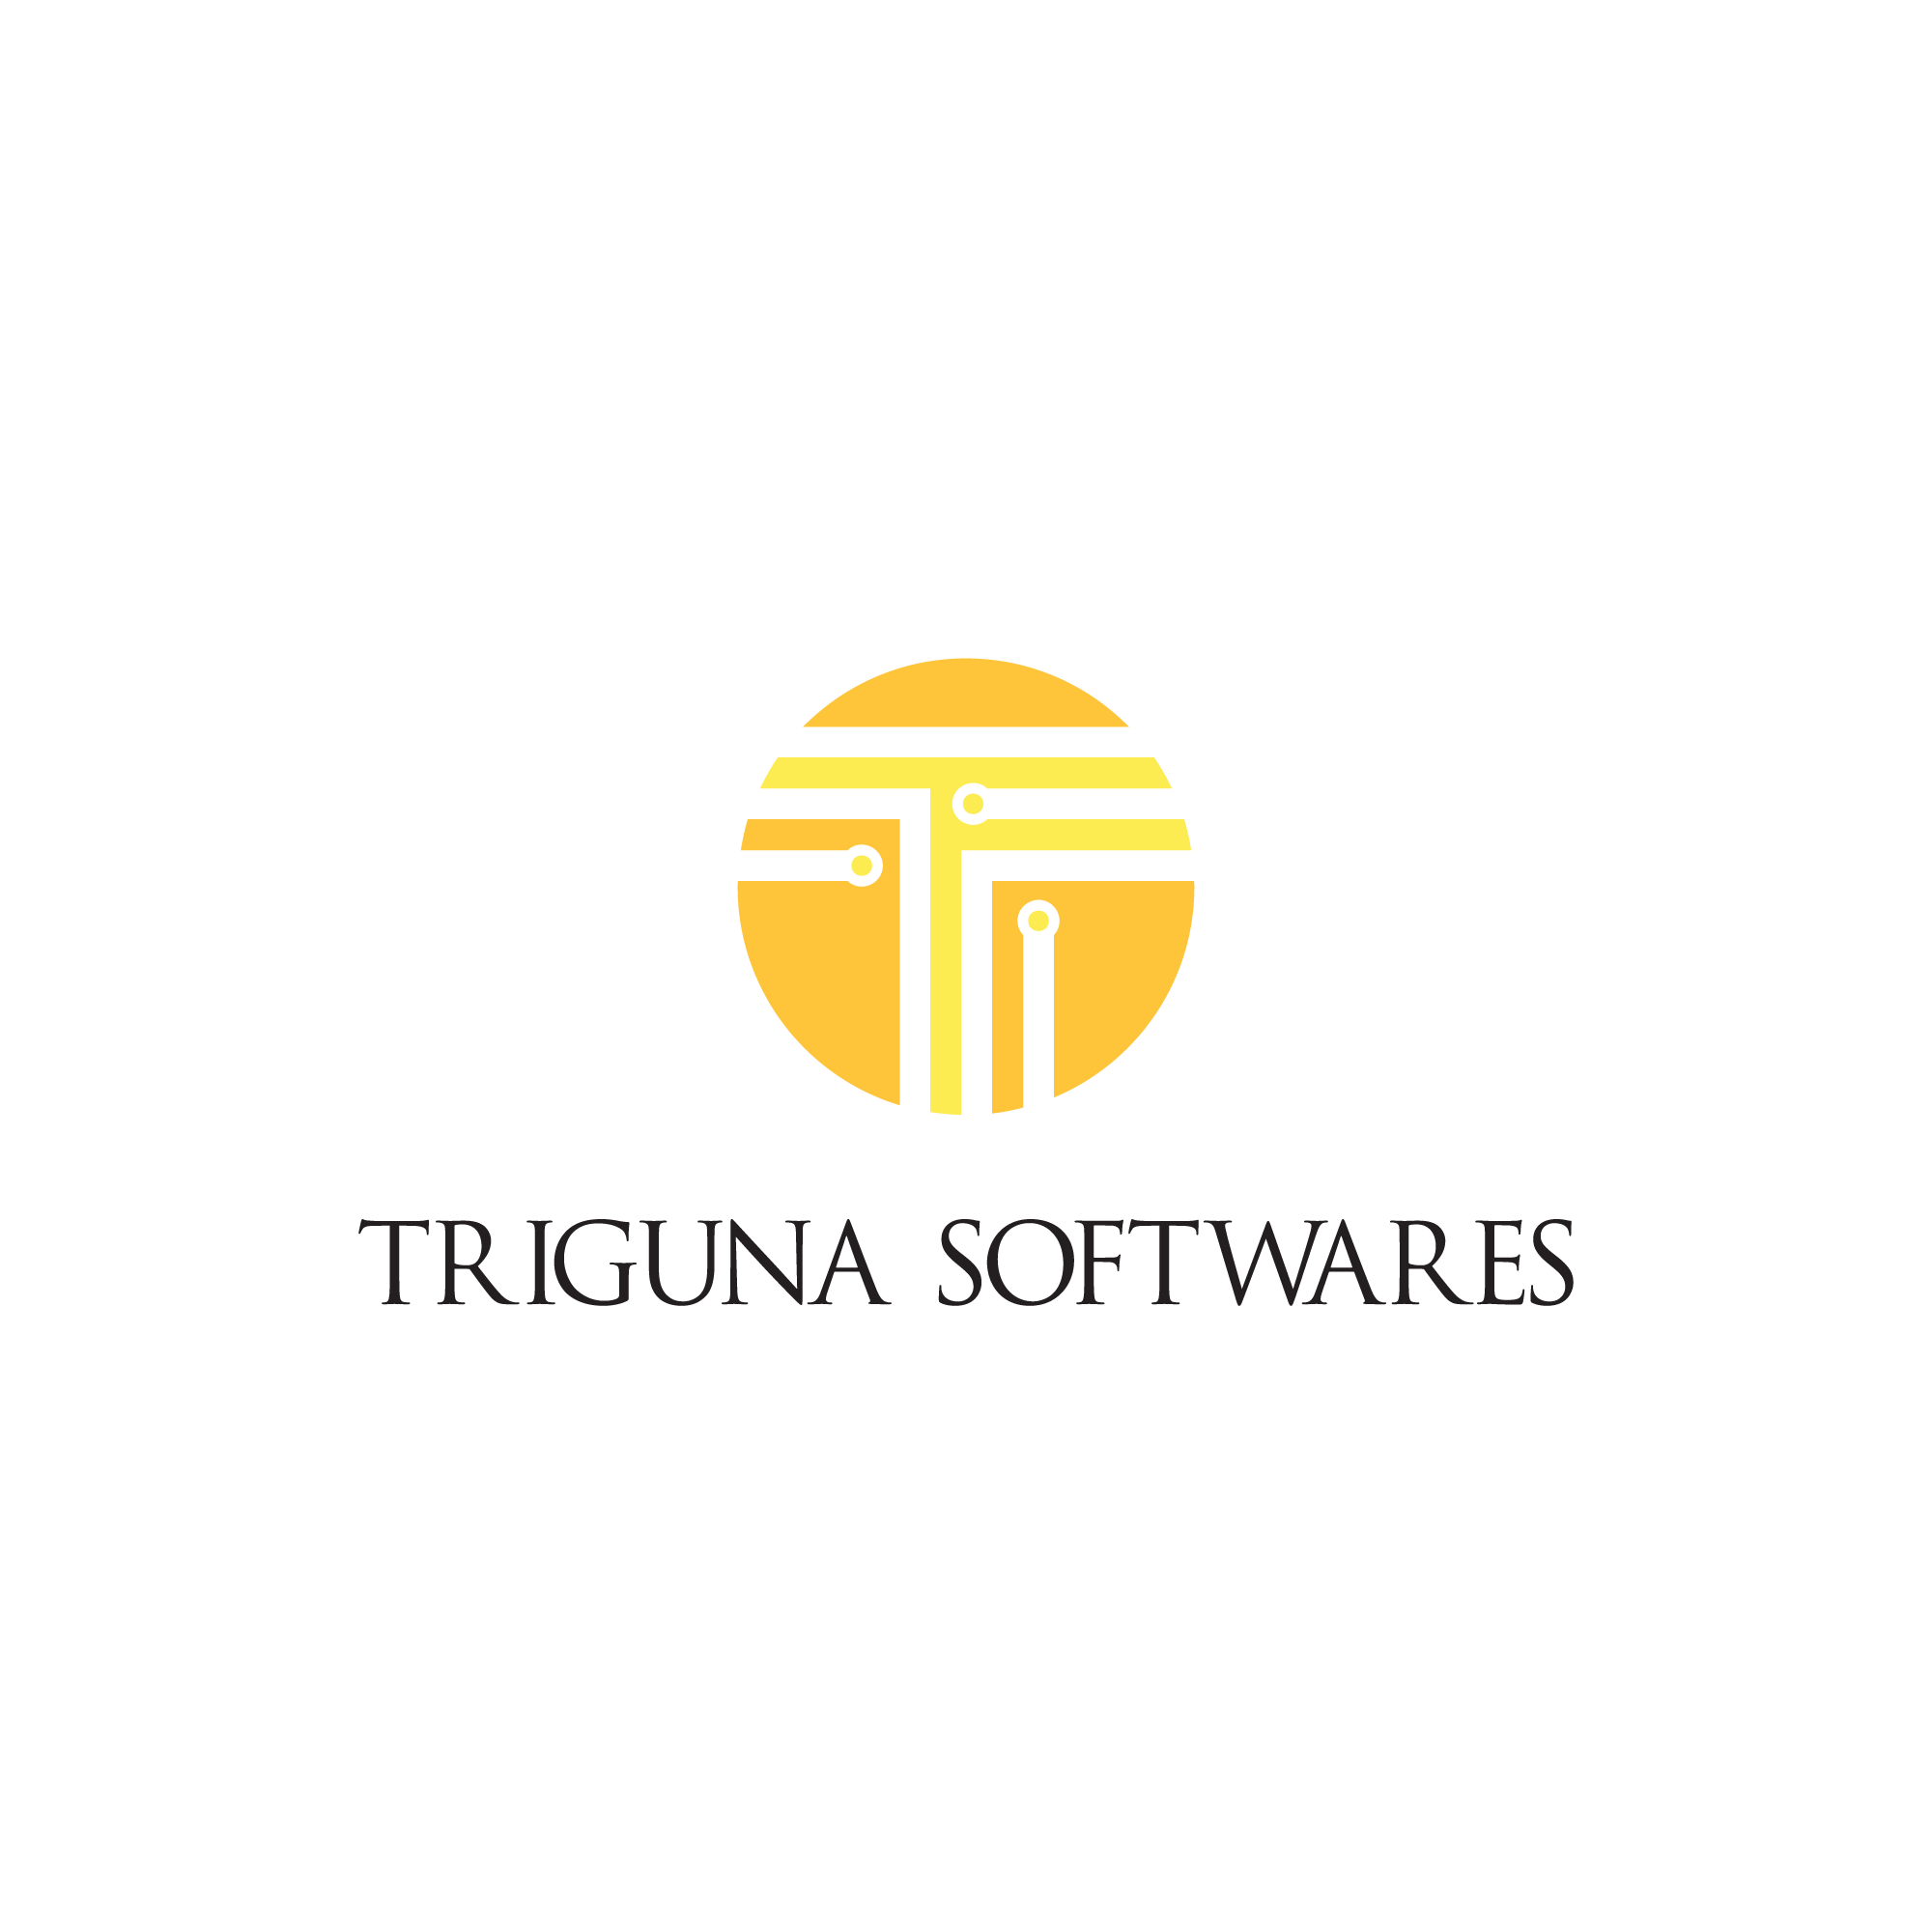 Triguna Softwares logo